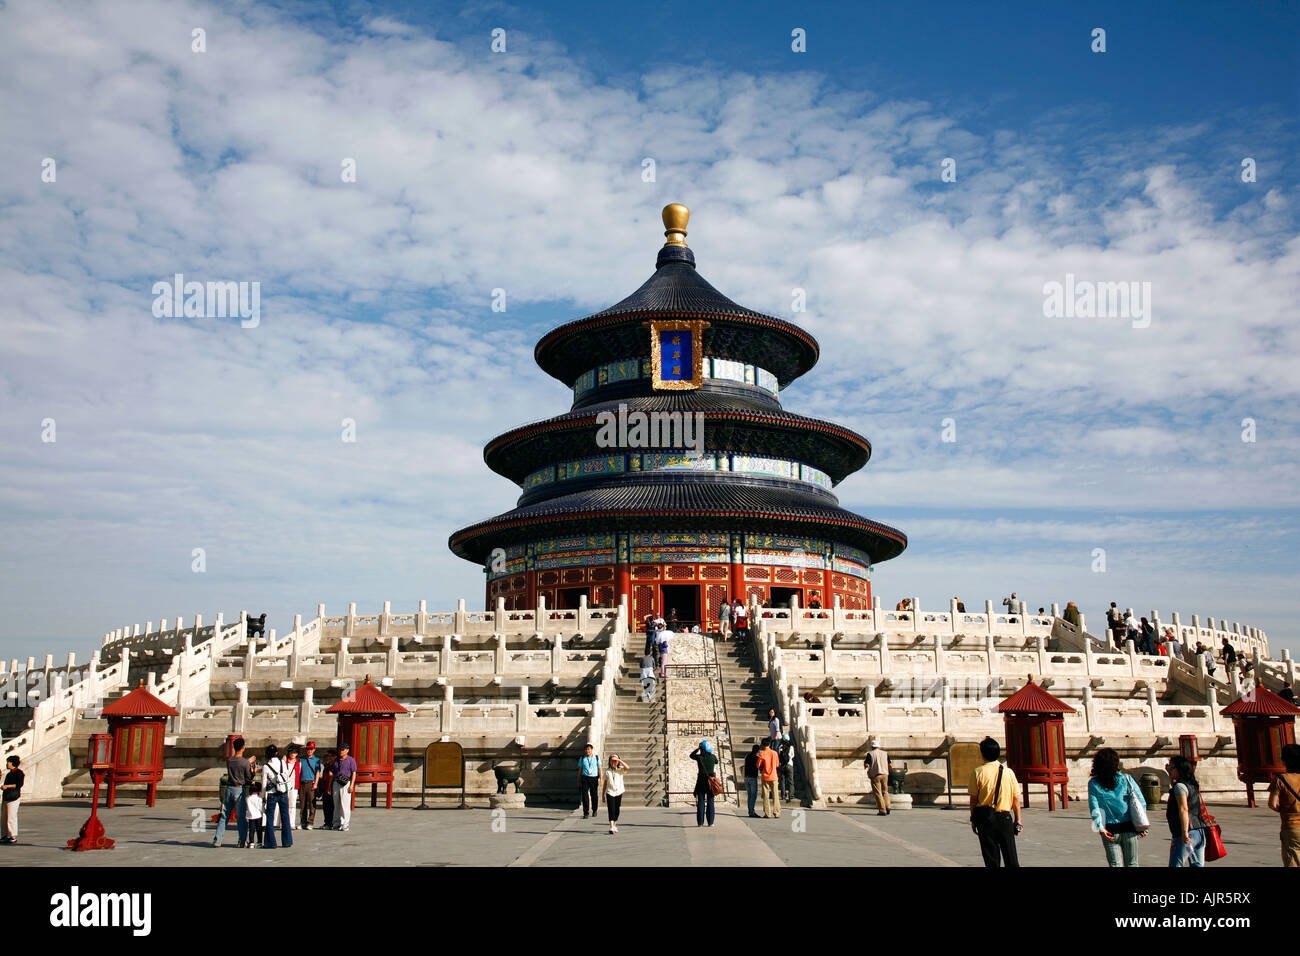 Gute Ernten Gebet Hall Tempel des Himmels Peking China Stockfoto